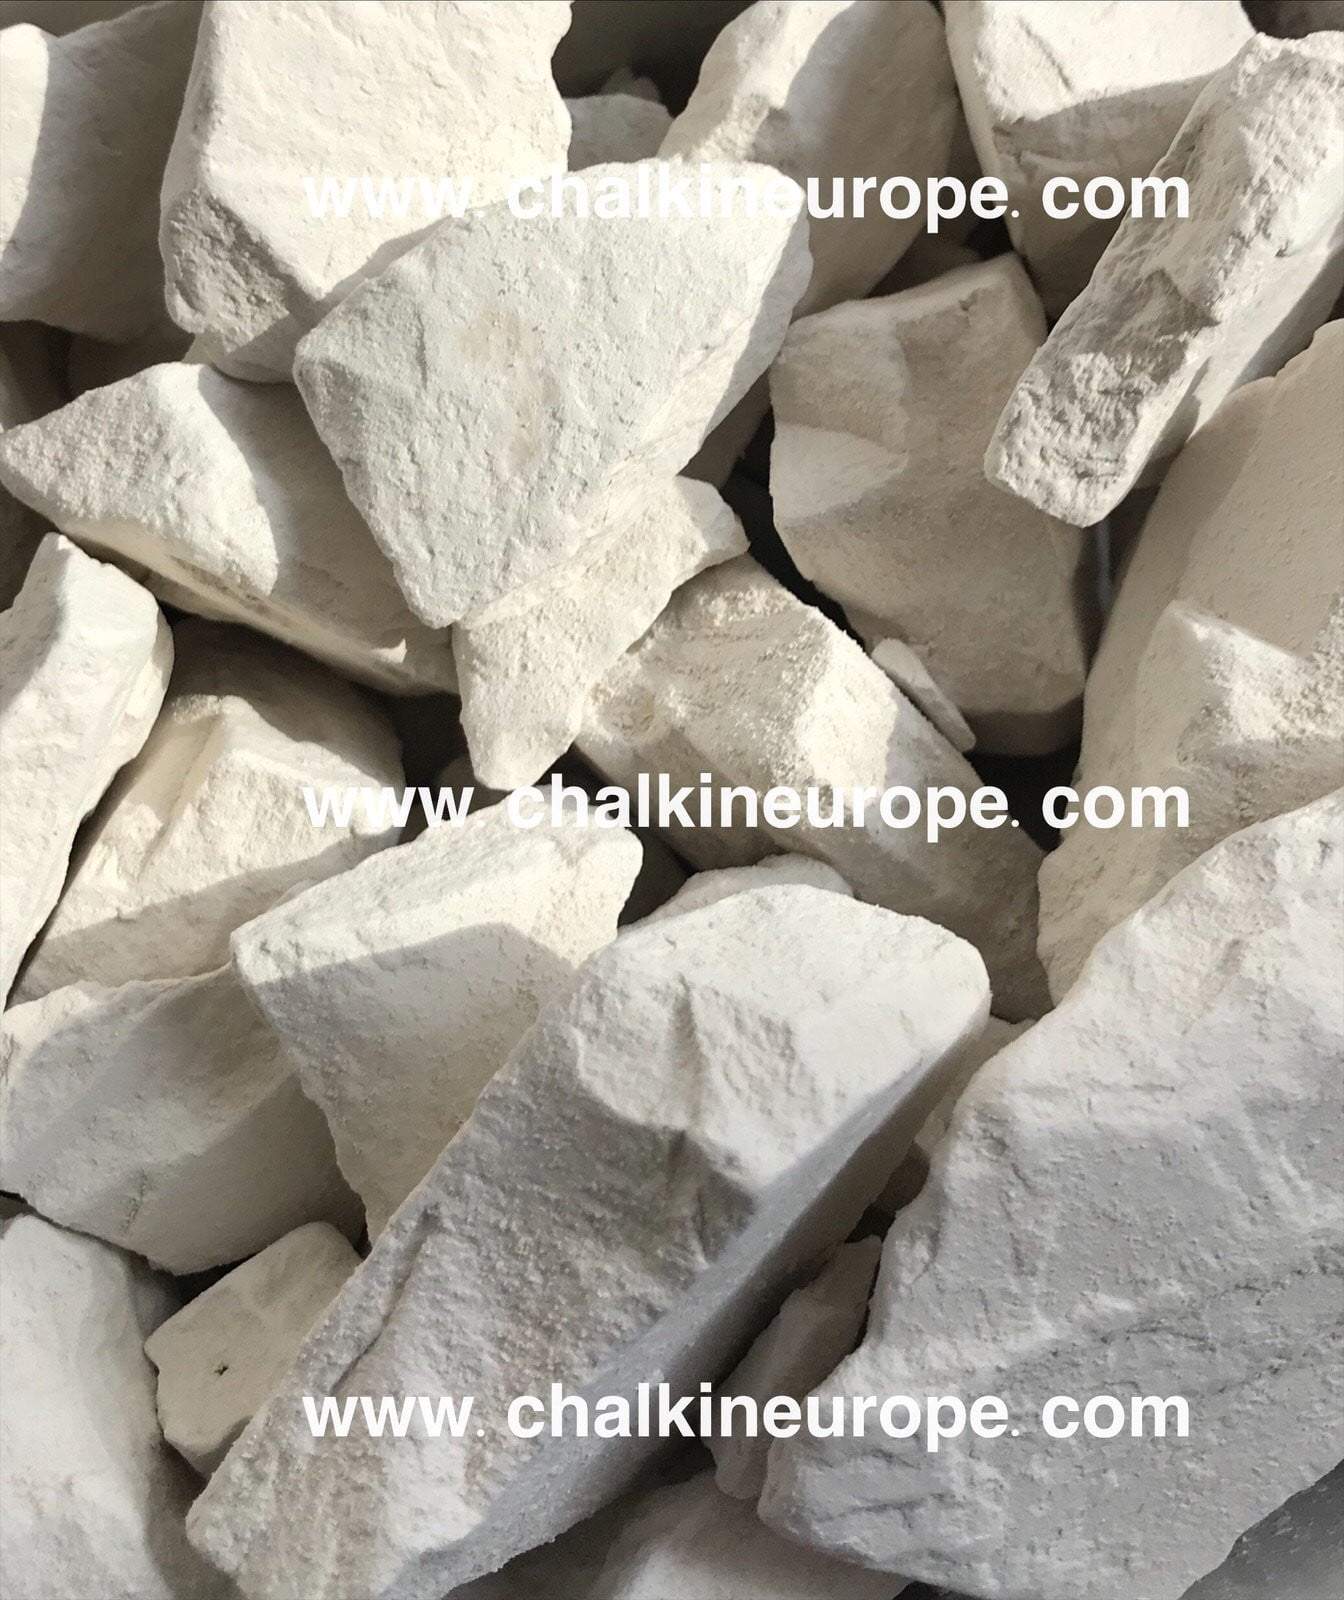 Edible Clay : WHITE edible Clay chunks (lump) natural for eating